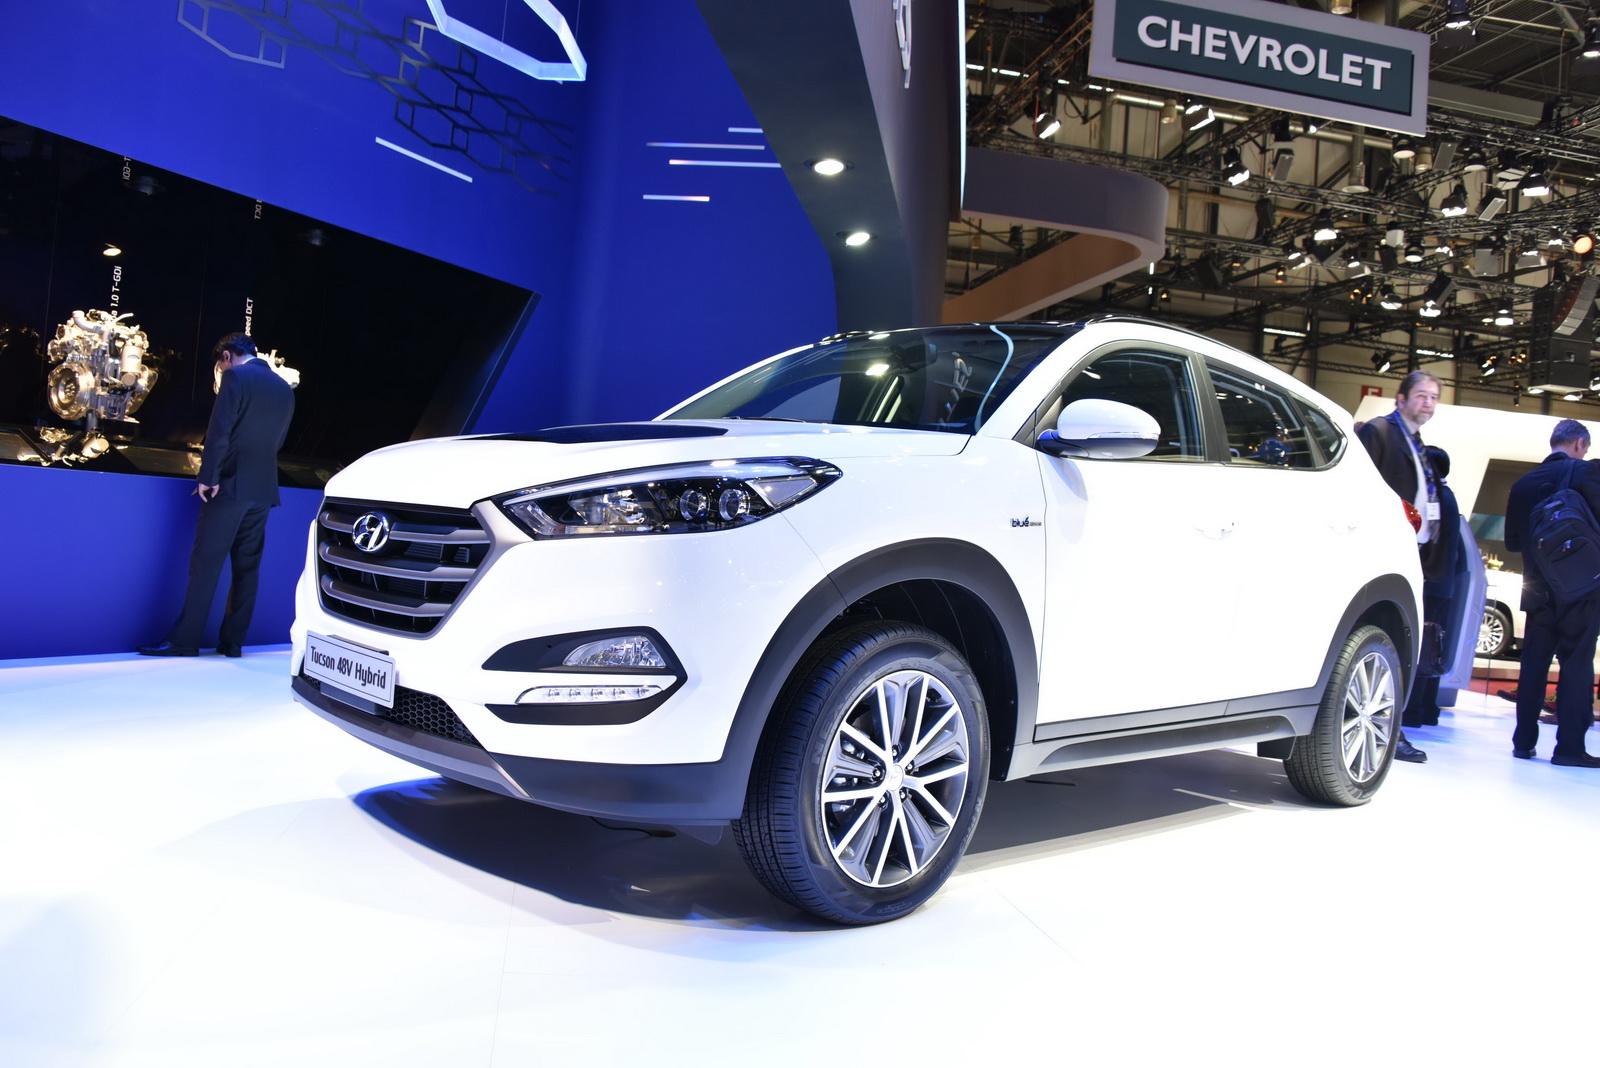 Hyundai Tucson 48V Hybrid and Plug-in Hybrid Concepts Showcased in